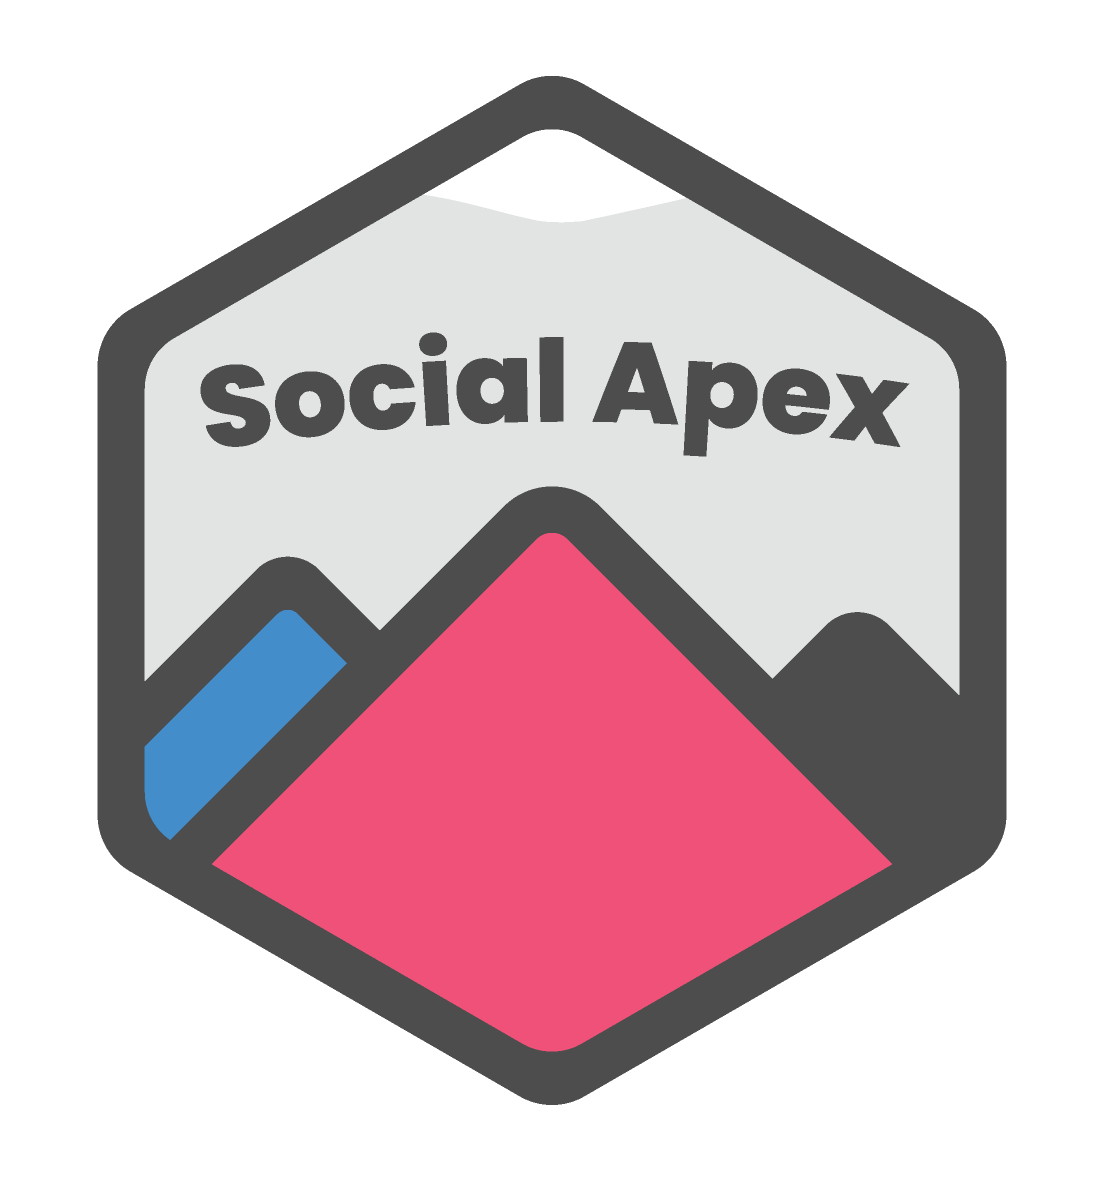 Social Apex logo